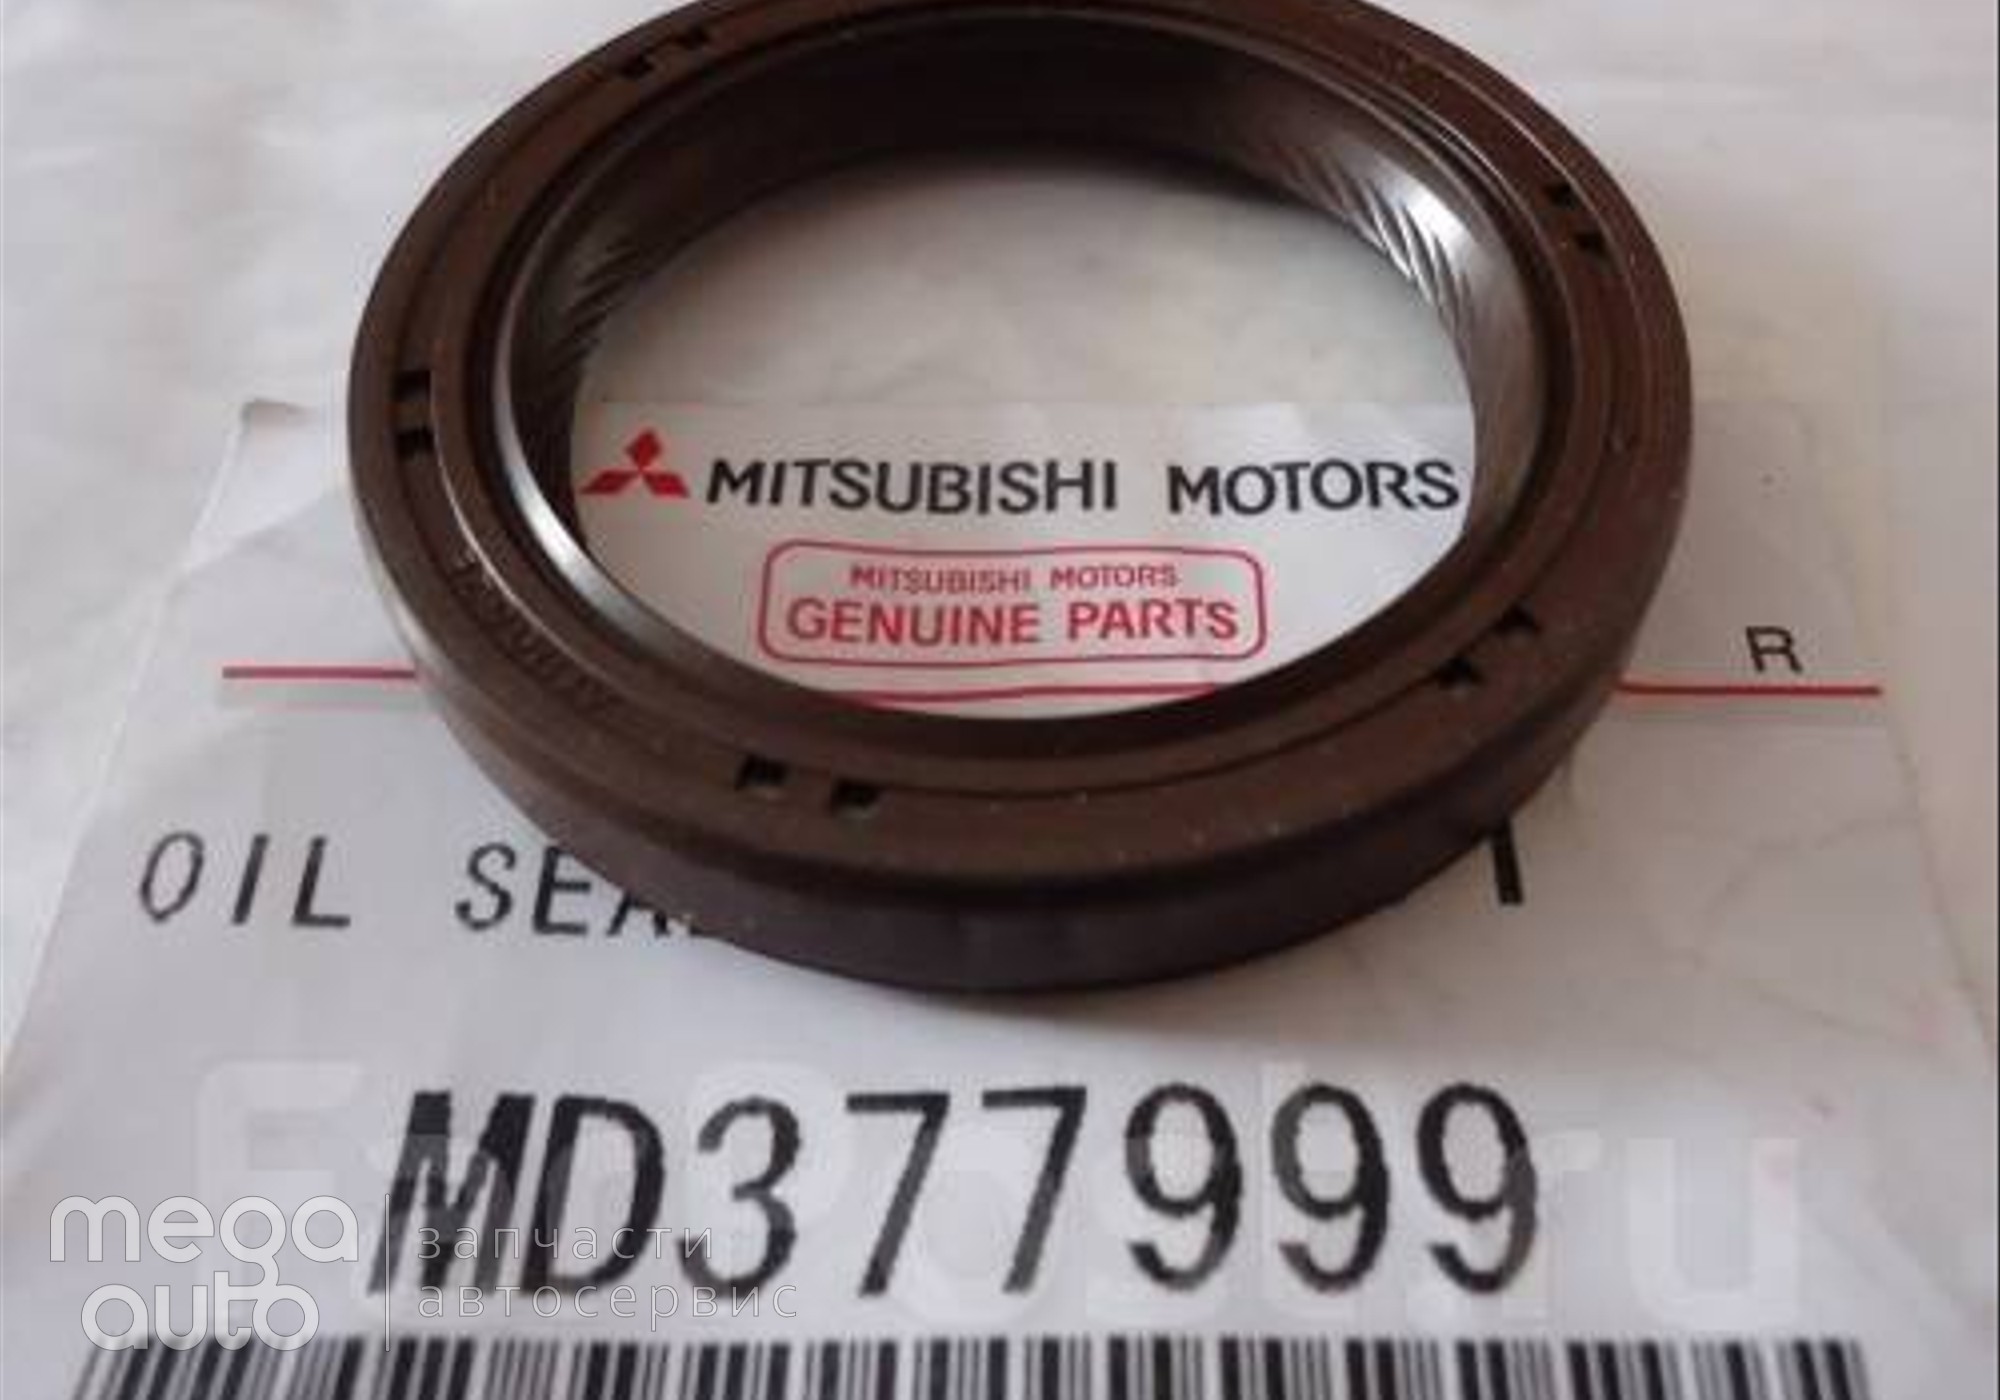 MD377999 Сальник коленвала митсубиси для Mitsubishi Lancer IX (с 2000 по 2010)